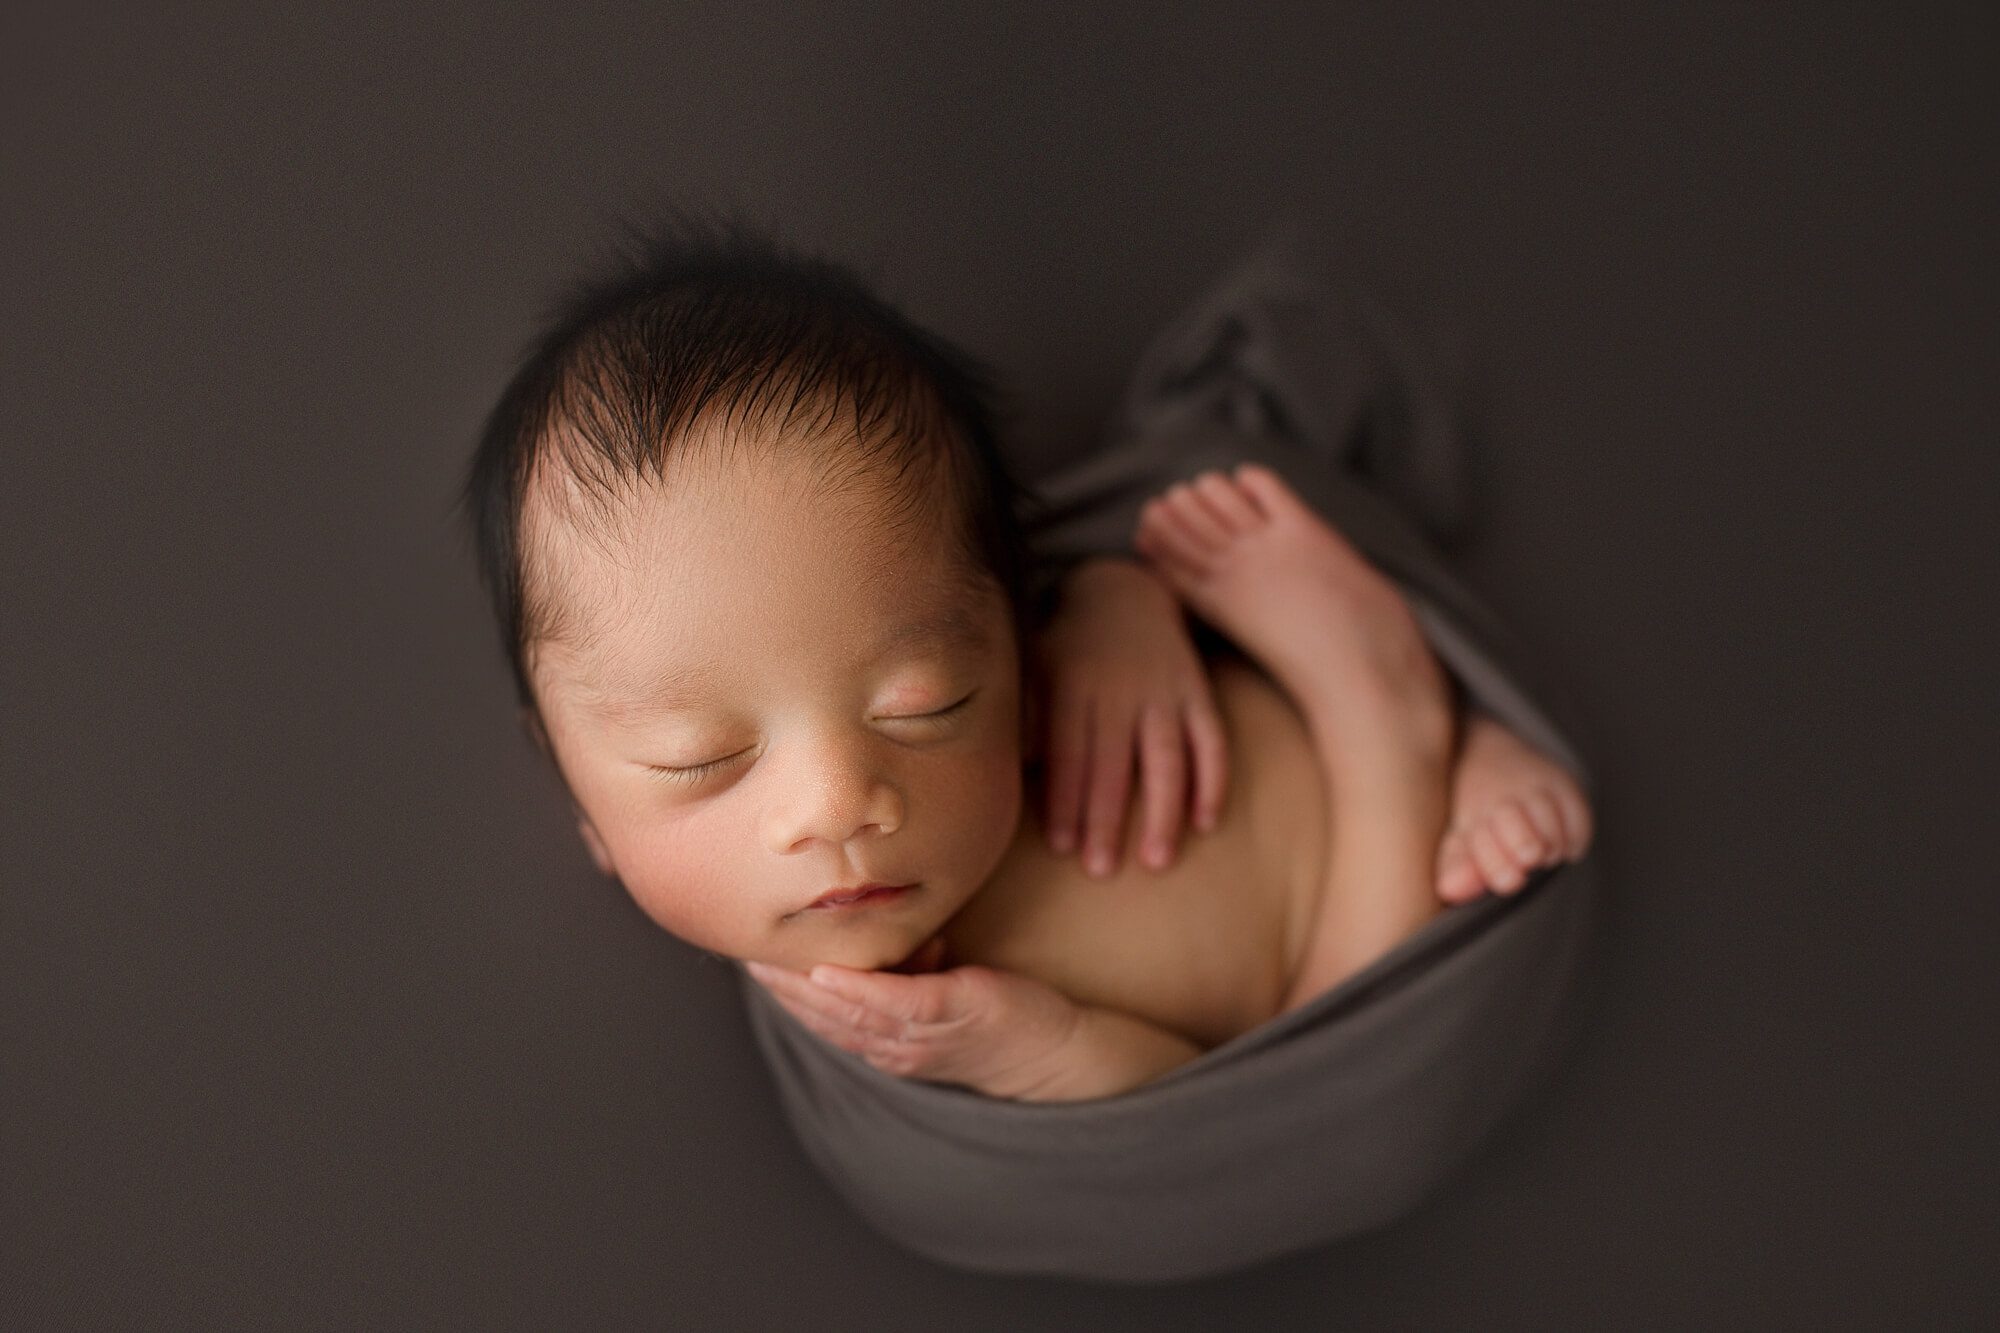 newborn photography seattle | baby boy session puyallup